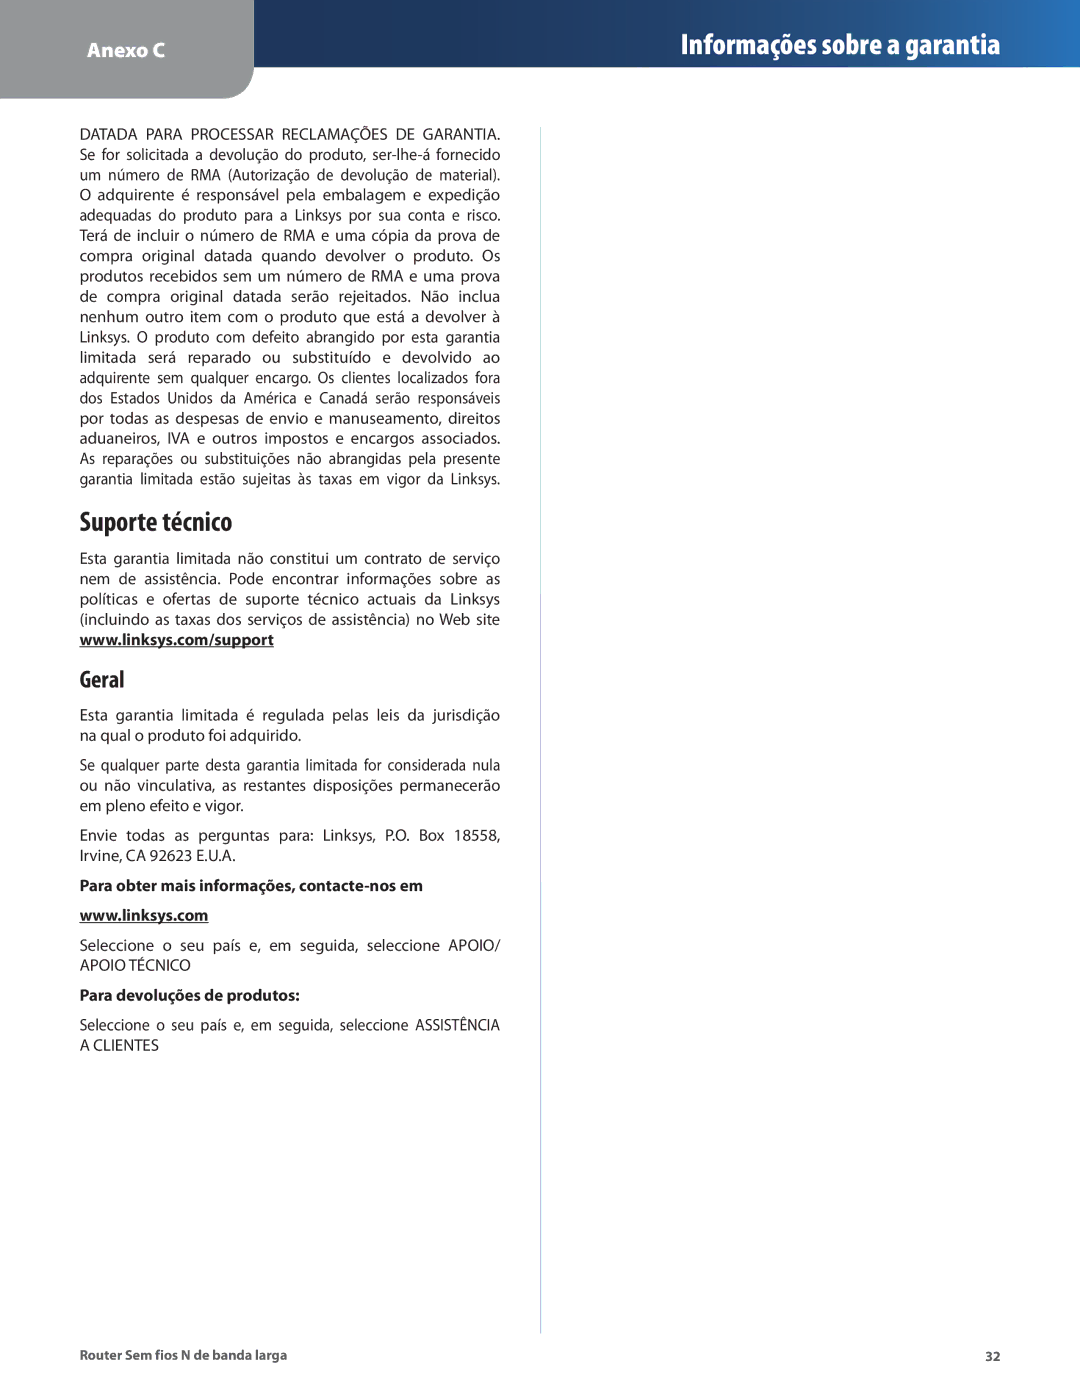 Linksys WRT160N manual Suporte técnico, Geral 